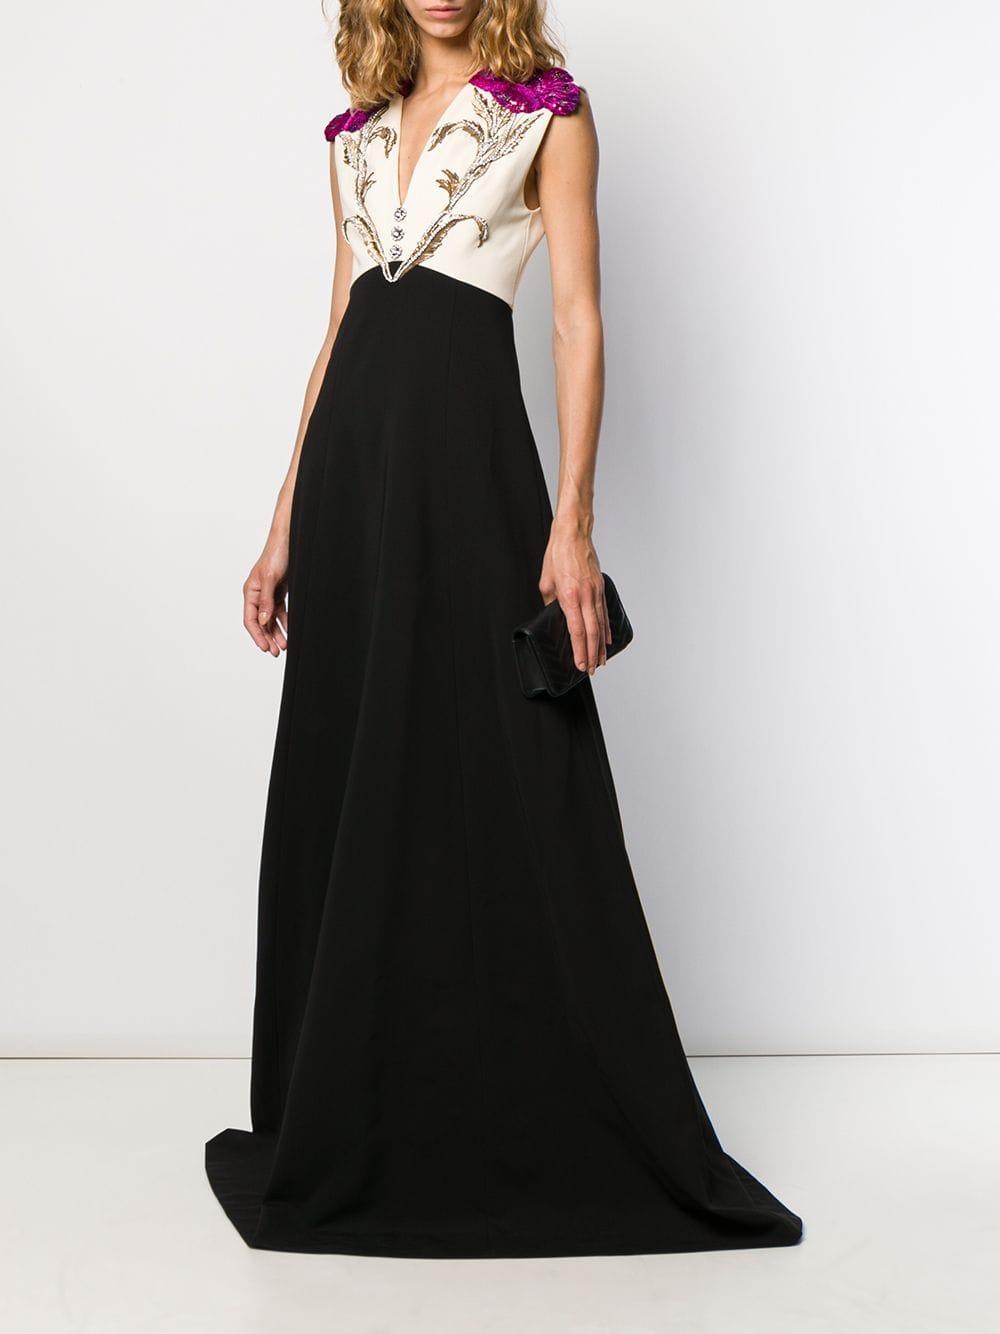 Gucci Floral Appliqué Dress in Black Lyst